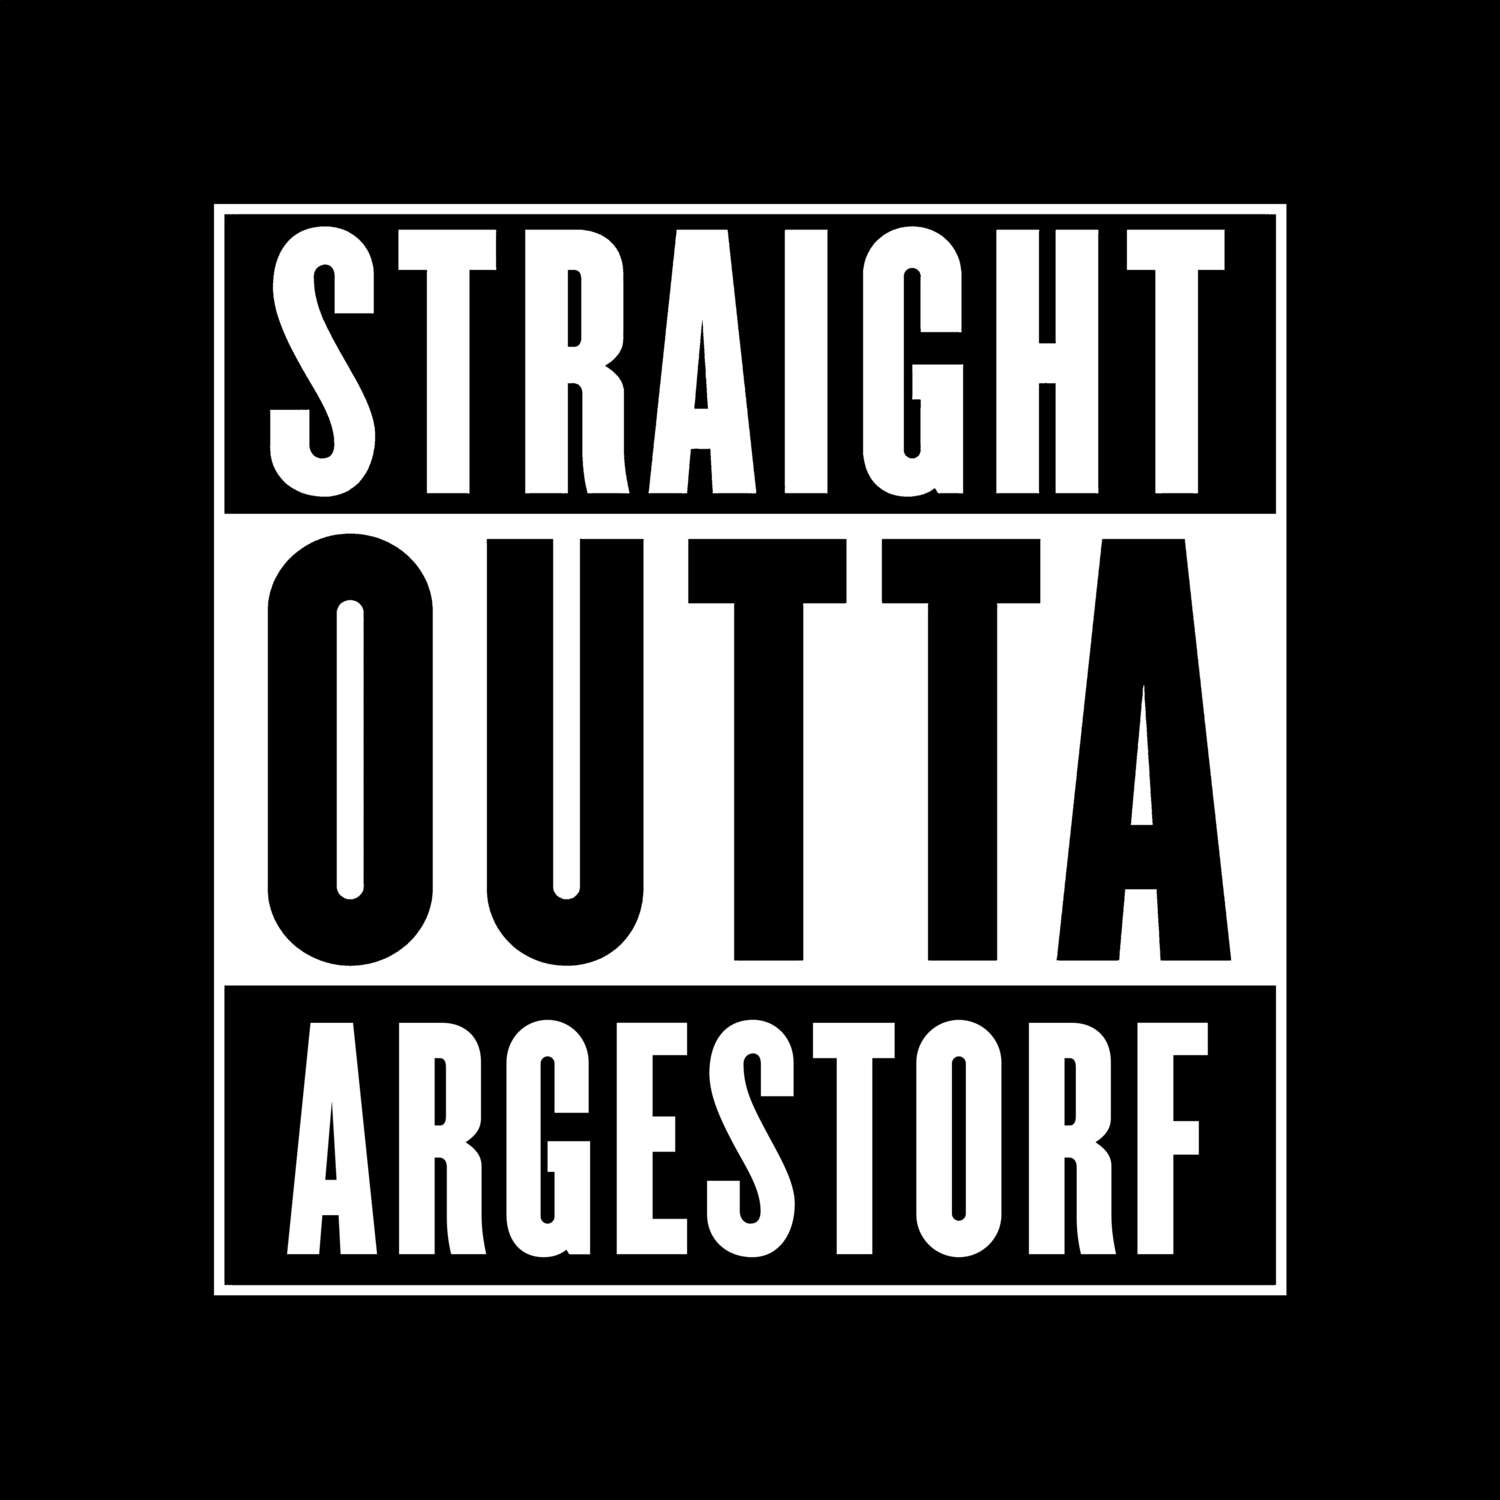 Argestorf T-Shirt »Straight Outta«